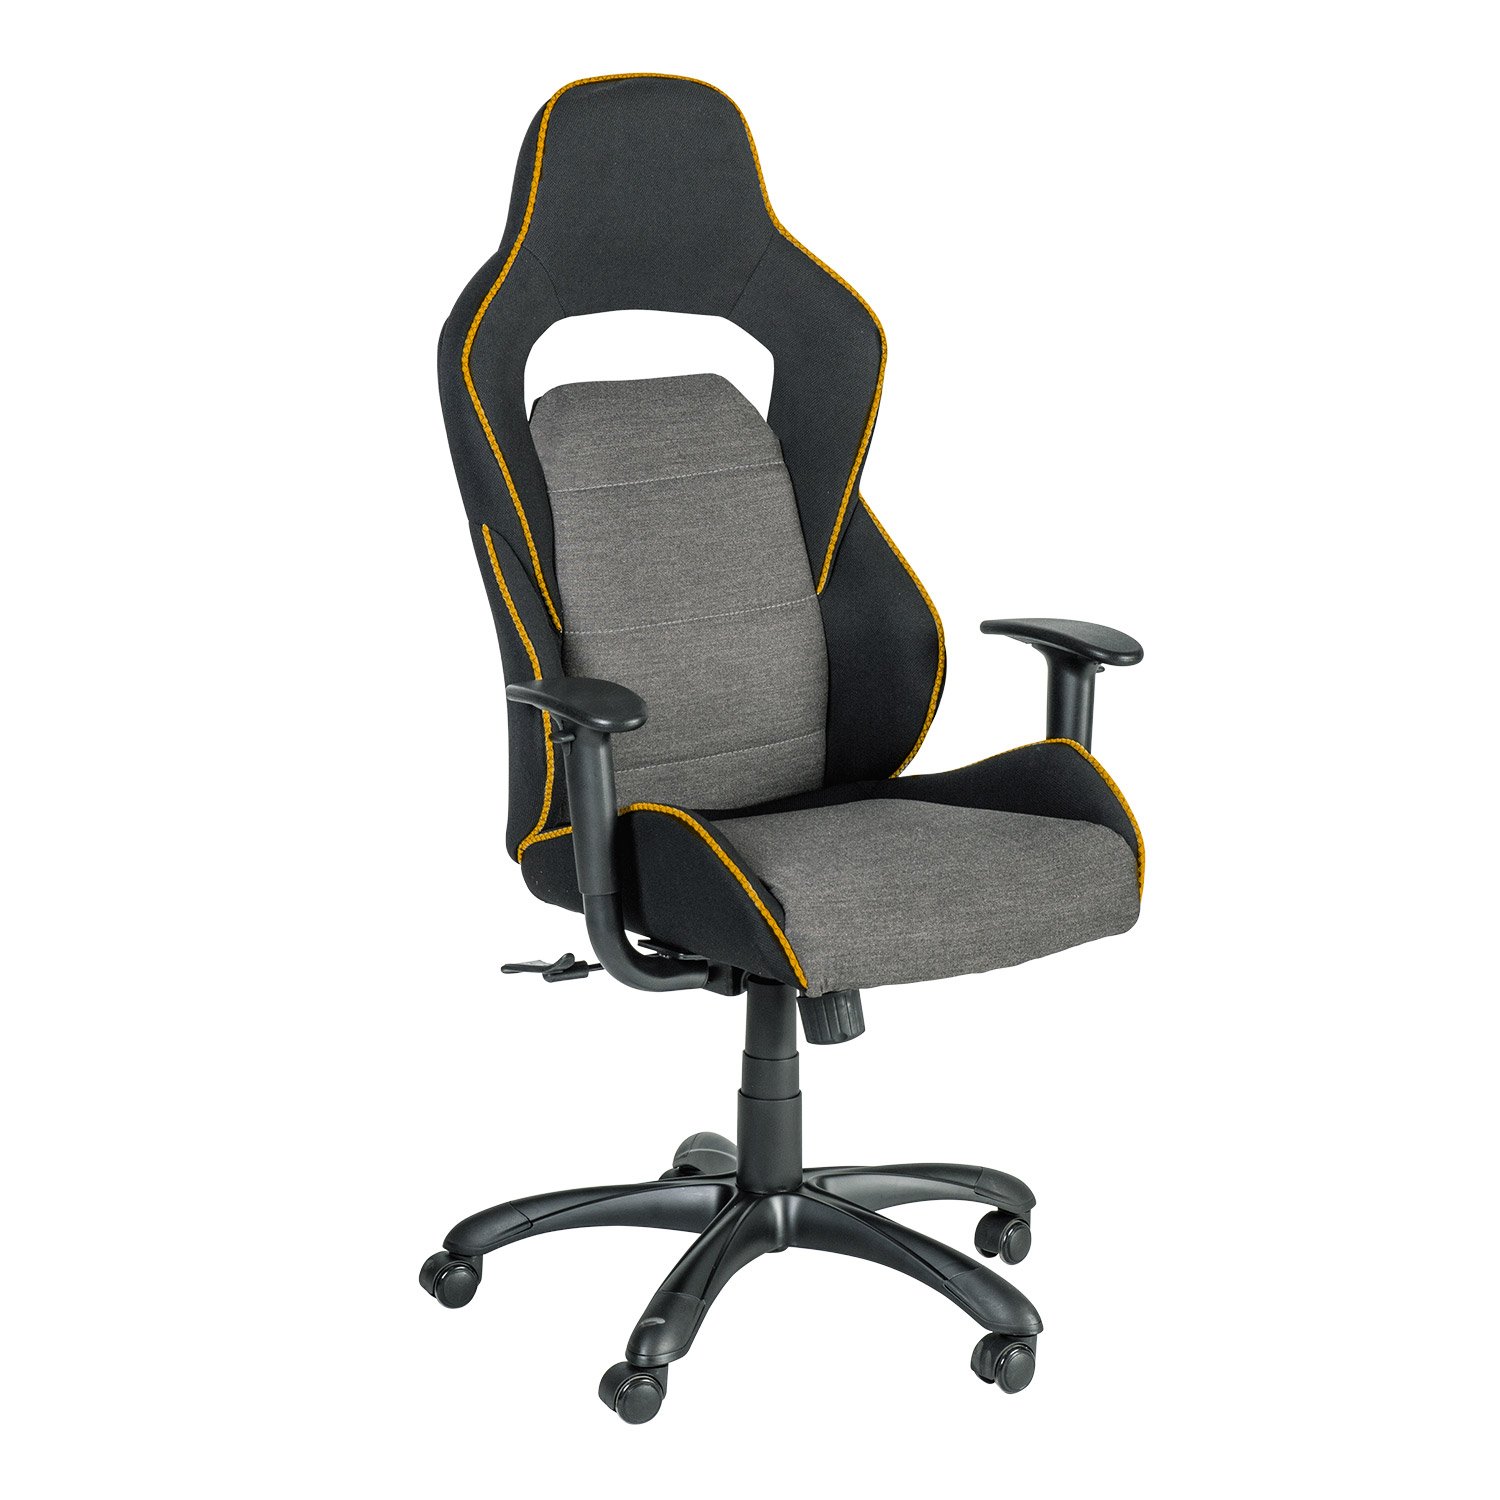 Biuro kėdė COMFORT 69x68xH120-130 cm, juoda/pilka